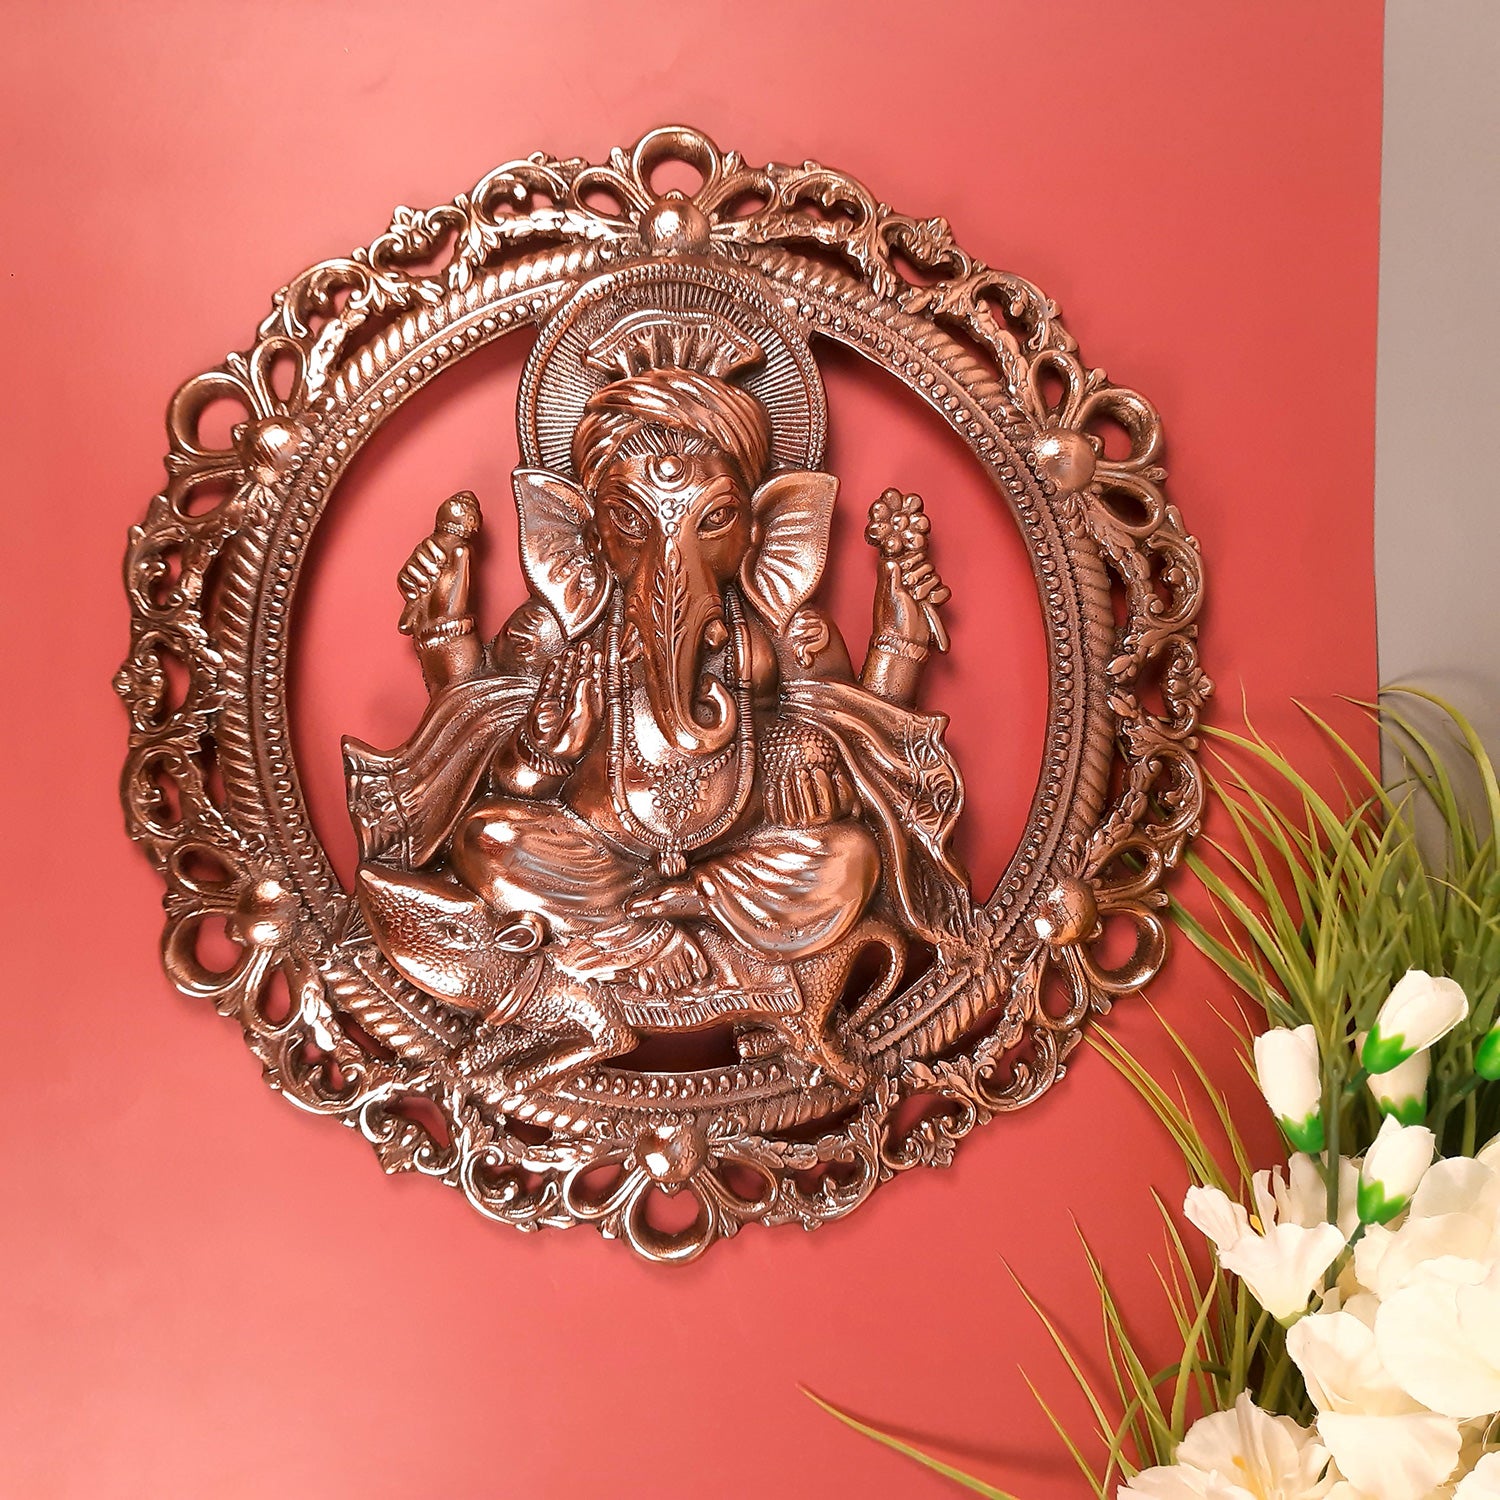 Lord Ganesh Wall Hanging Idol | Metal Ganesha Wall Statue Decor for Main Gate | Ganpati Murti for Home, Puja & Religious Decor & Gift - 18 Inch - Apkamart